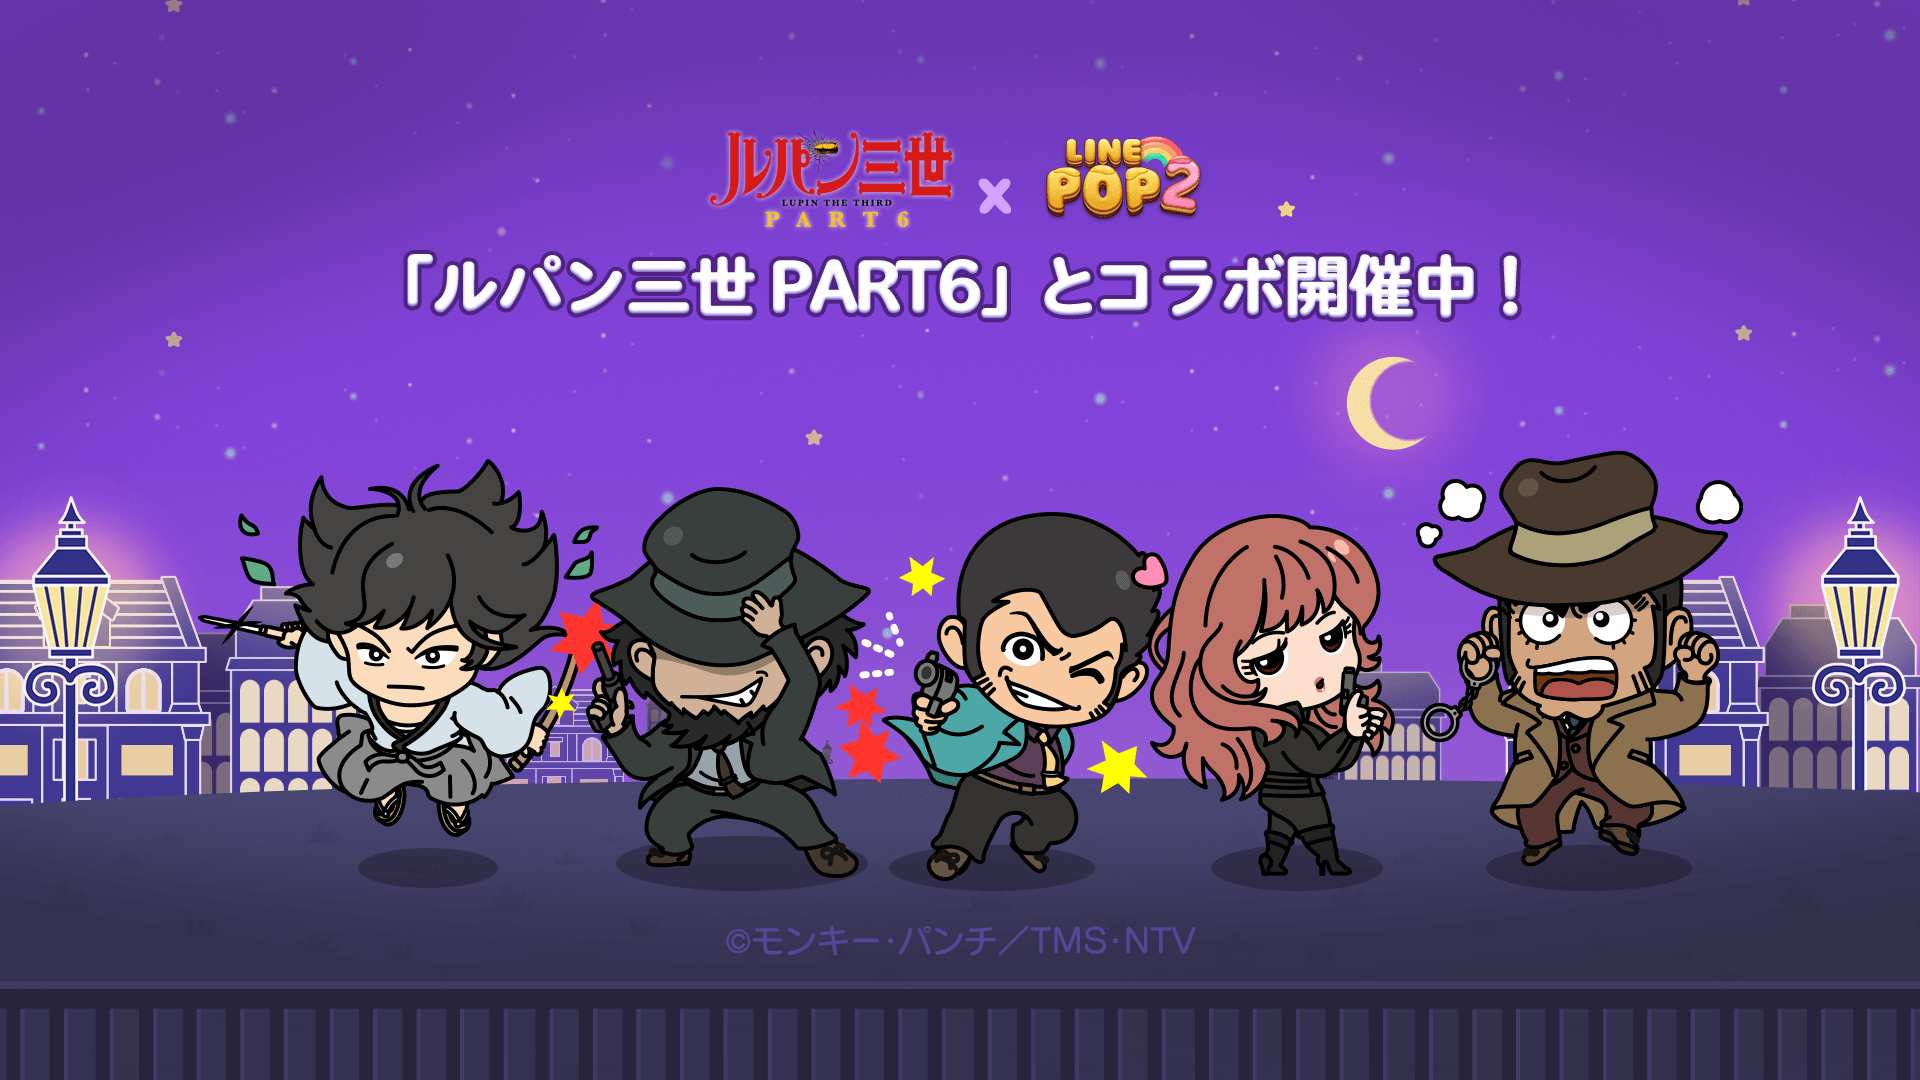 Line Pop2 Tvアニメ ルパン三世 Part6 とコラボレーション Line株式会社のプレスリリース